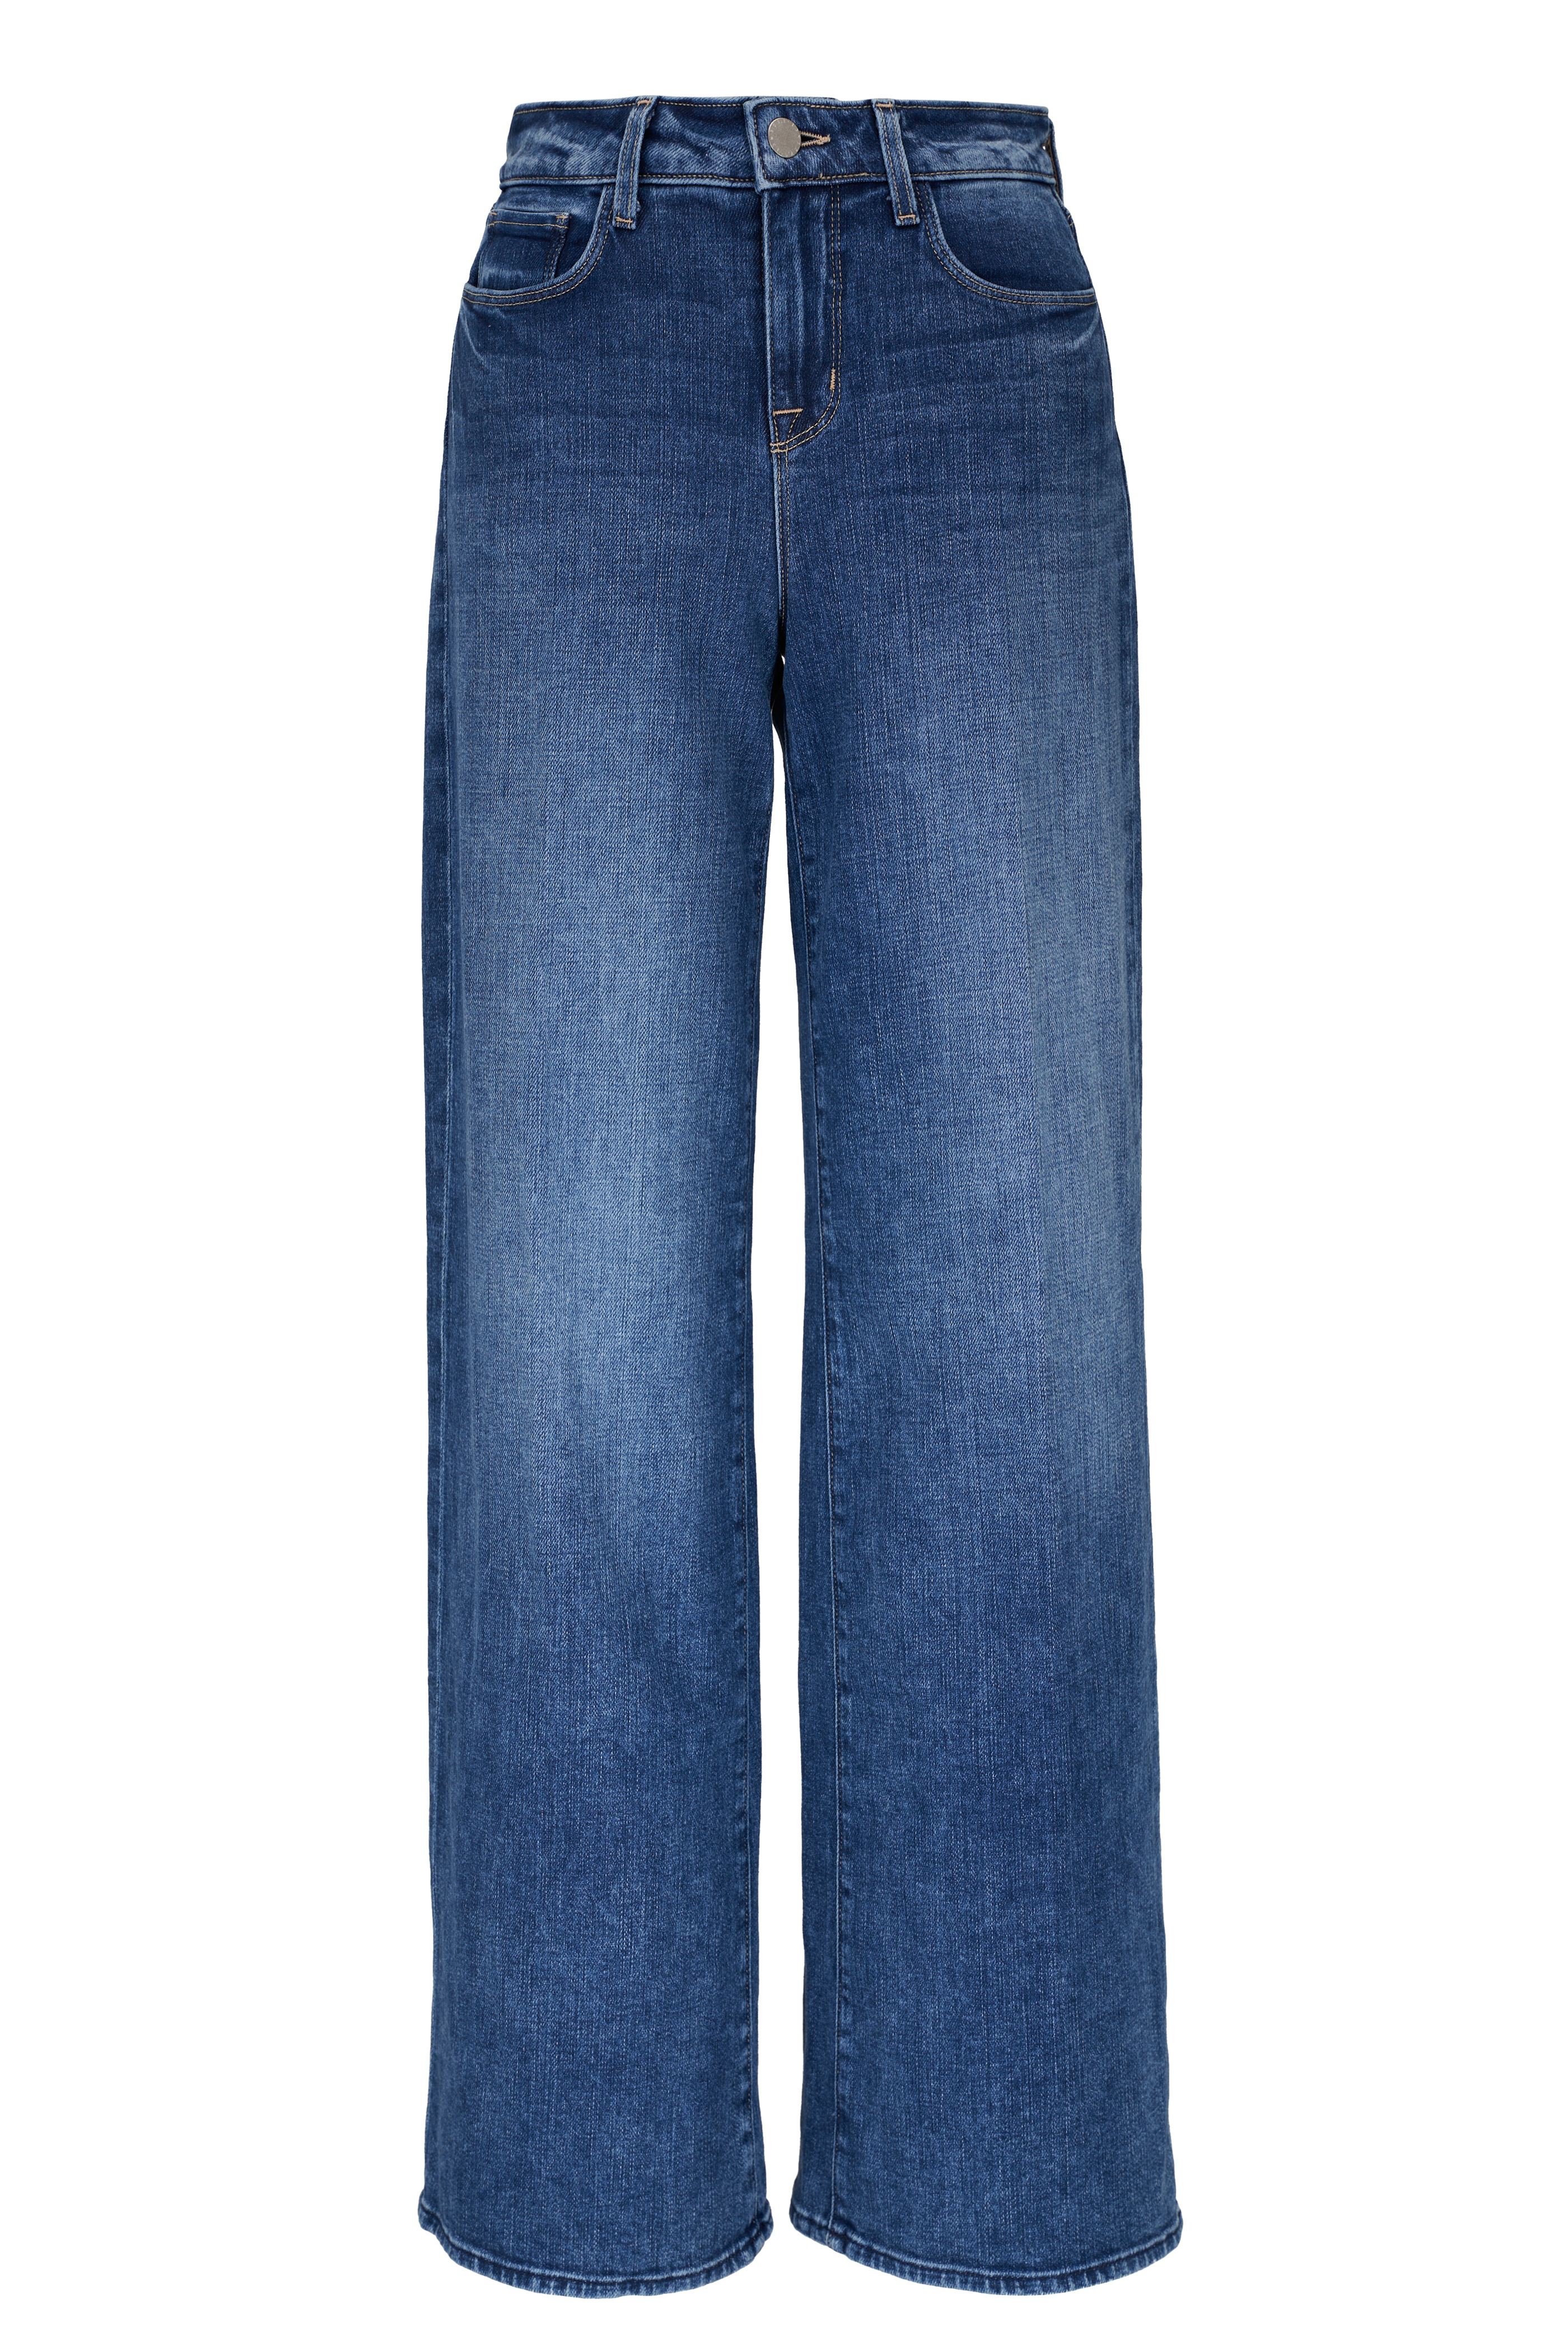 Lucky Brand Women's Zipper fly closure slim leg Mid-Rise Denim Jeans  30/Rampart 